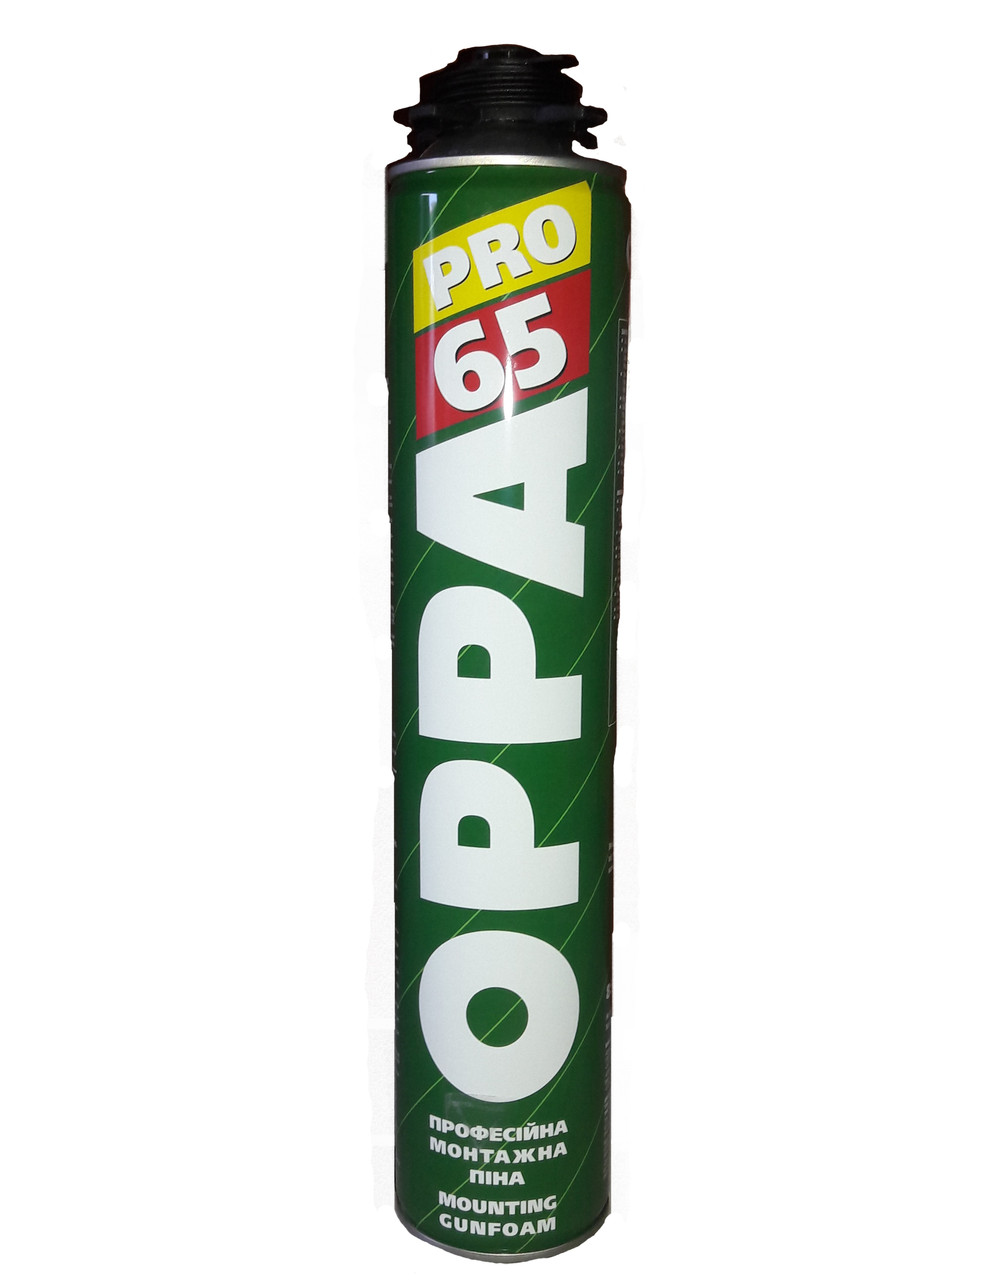 Піна монтажна OPPA 65 PRO, 850ml